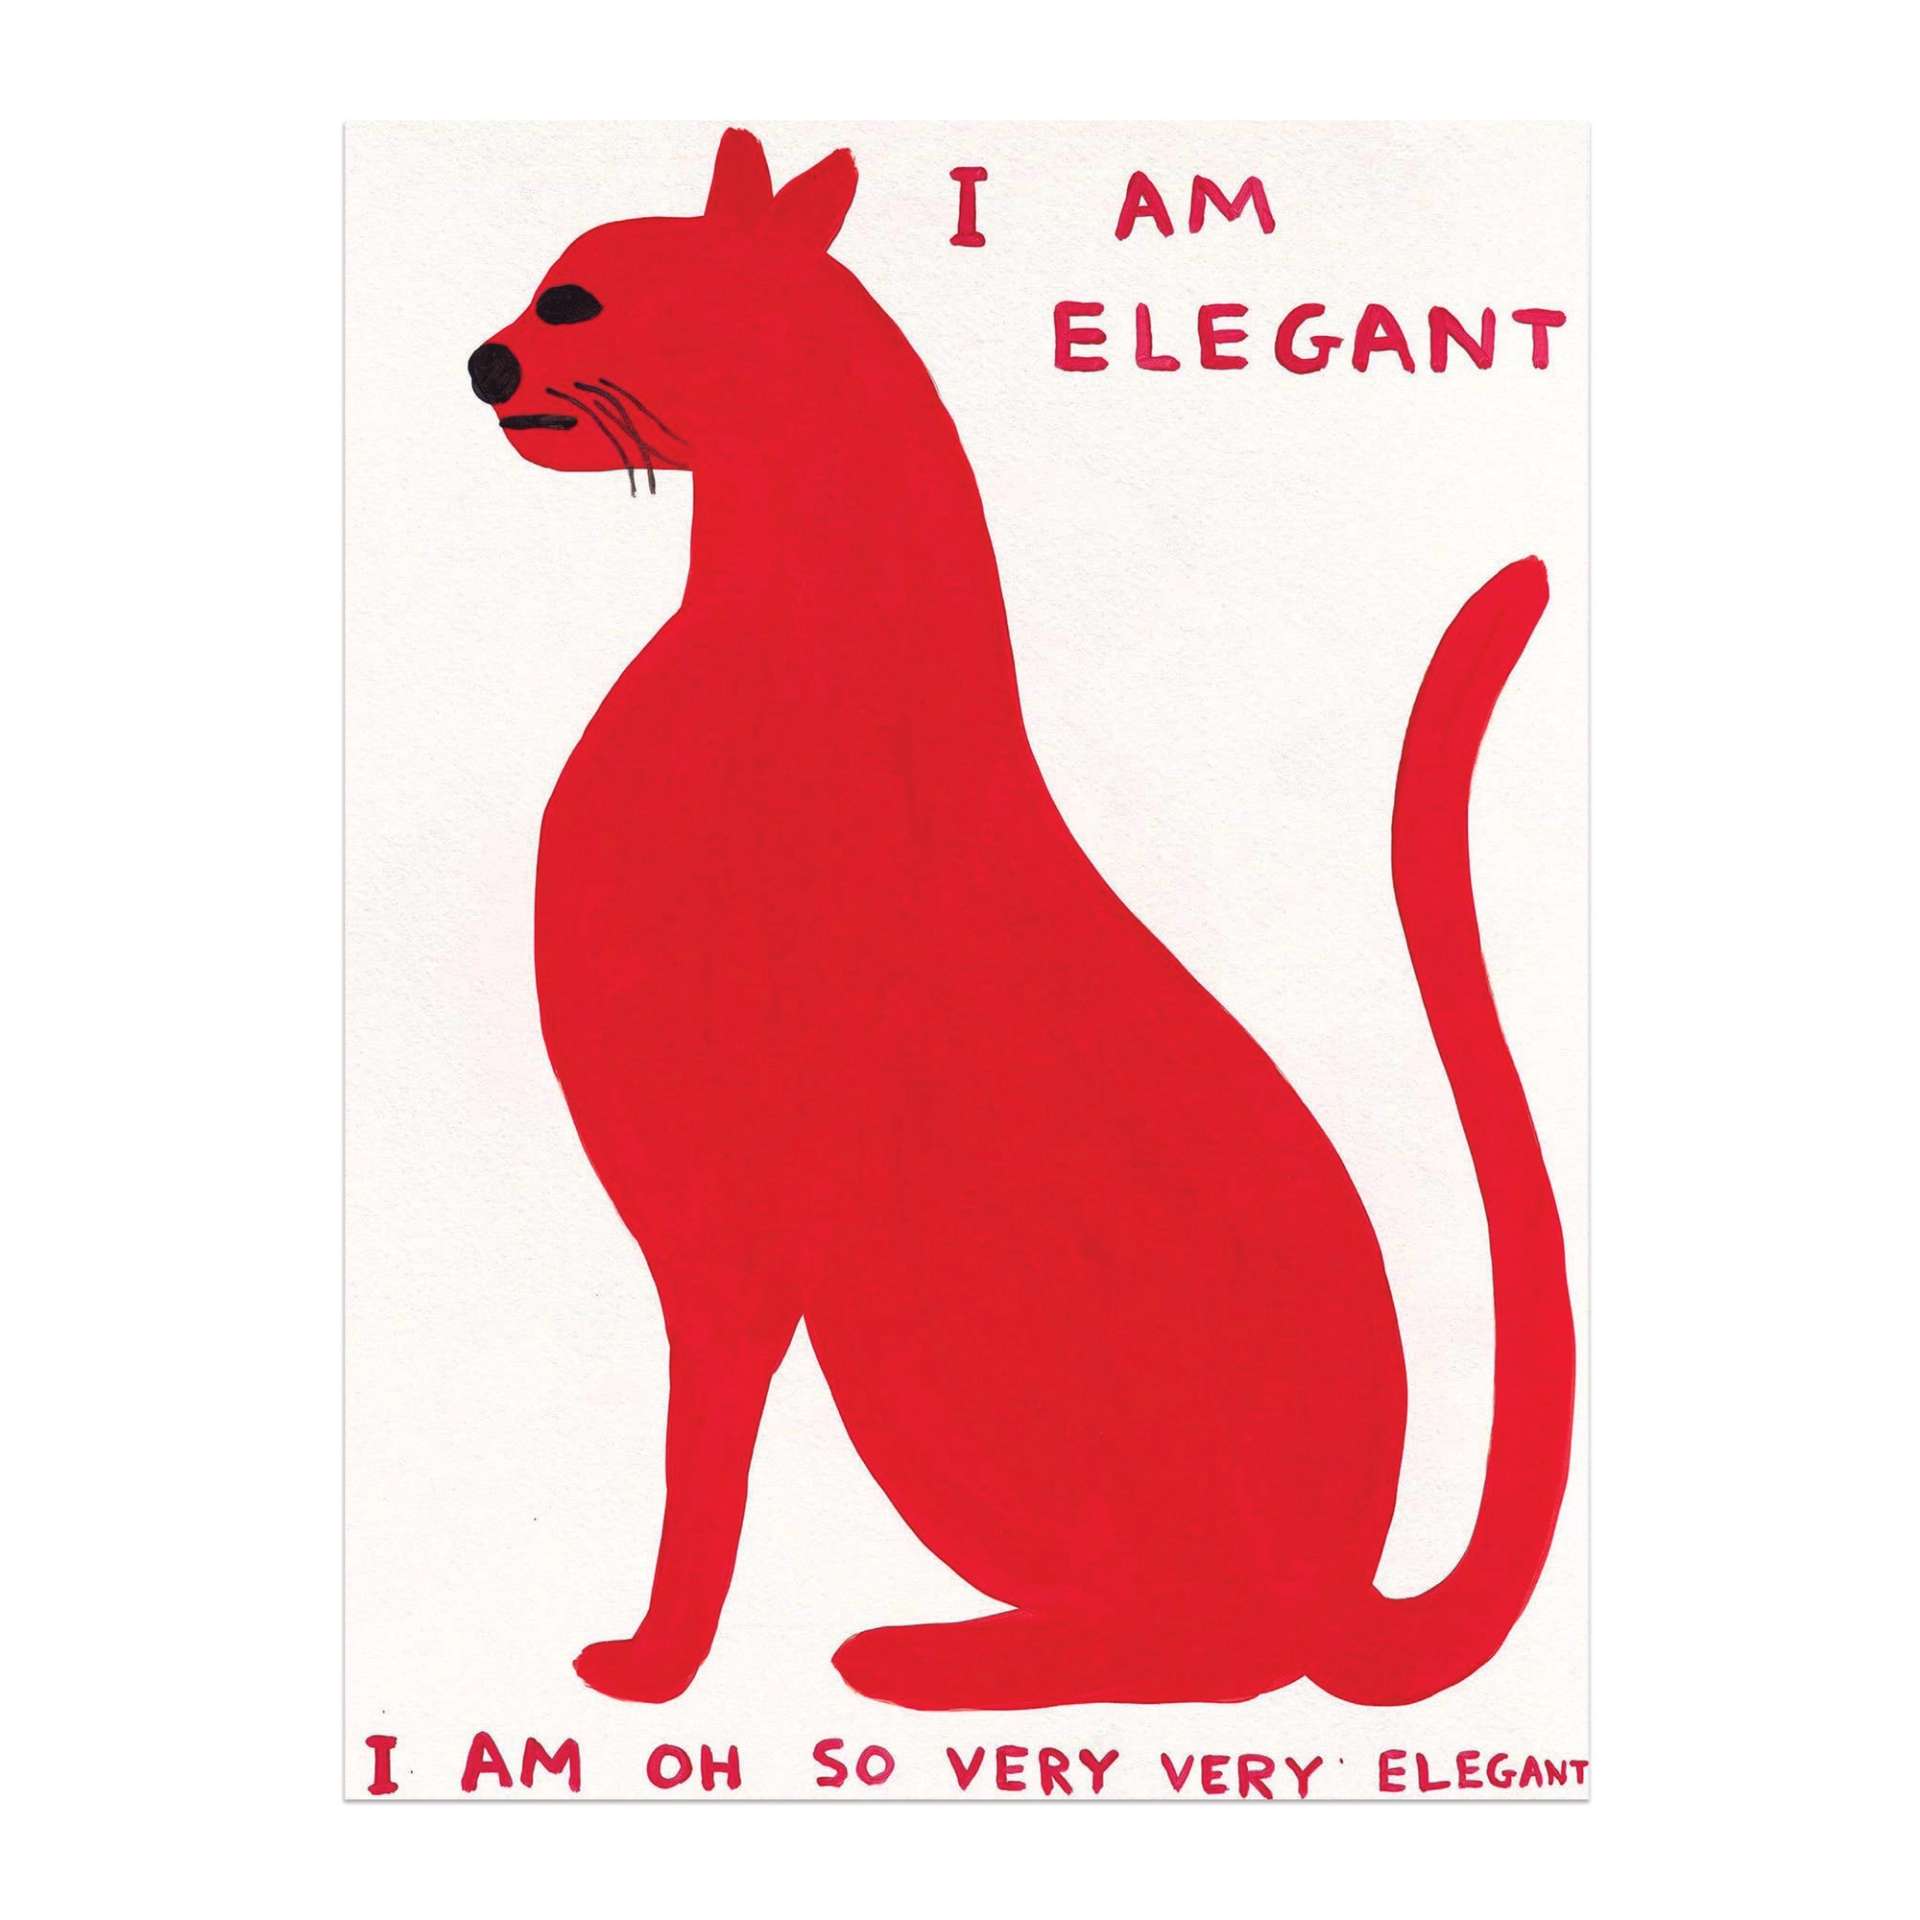 I Am Elegant, I Am Oh So Very Very Elegant by David Shrigley